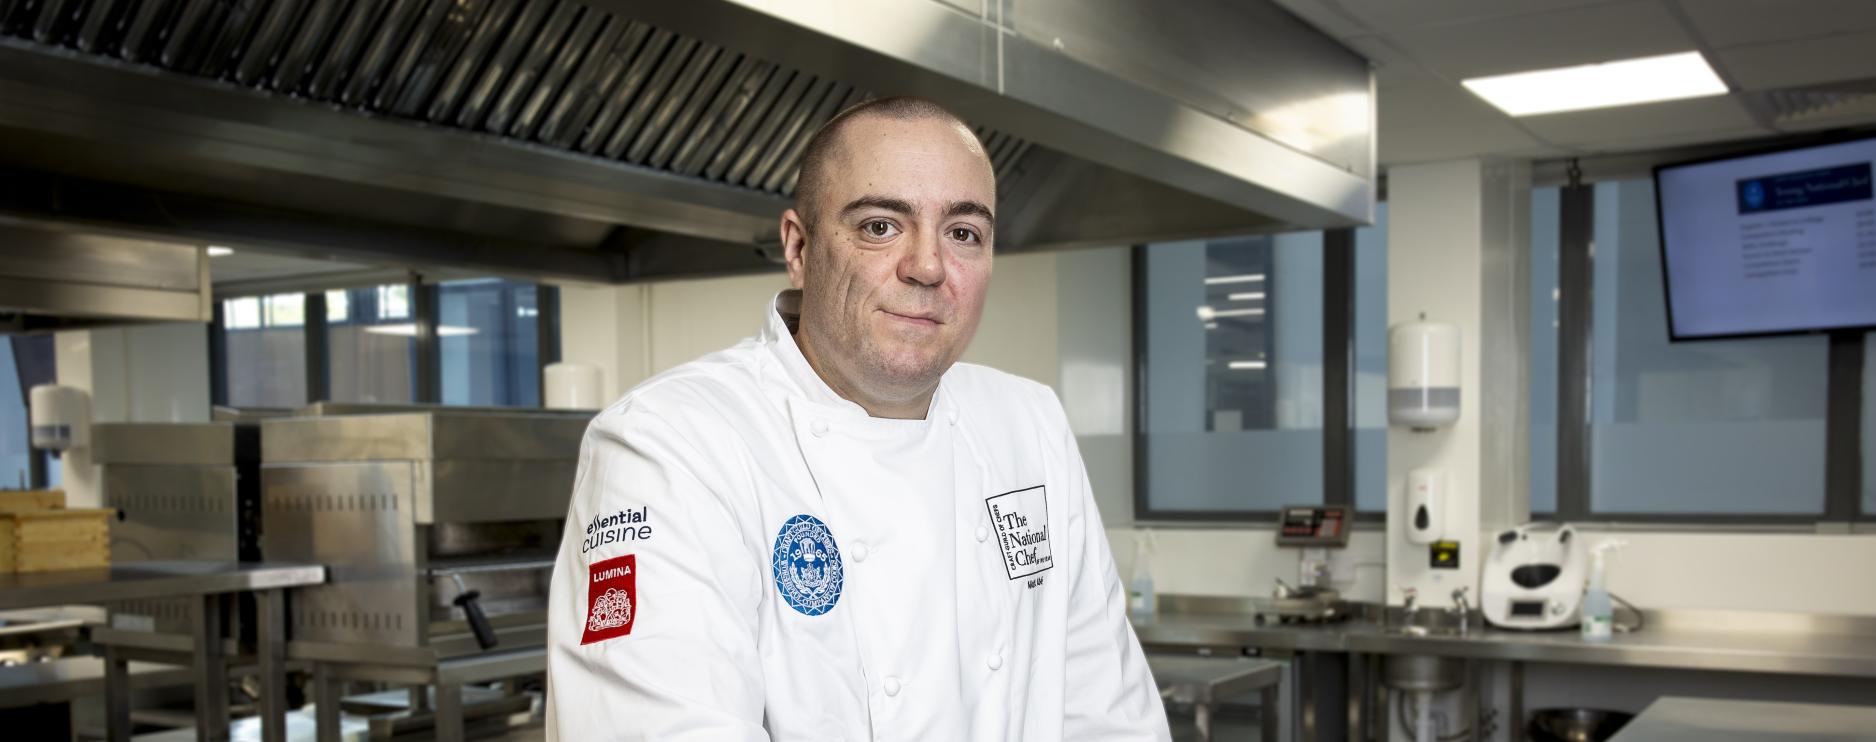 Matt Abé, chef patron at three Michelin starred Restaurant Gordon Ramsay